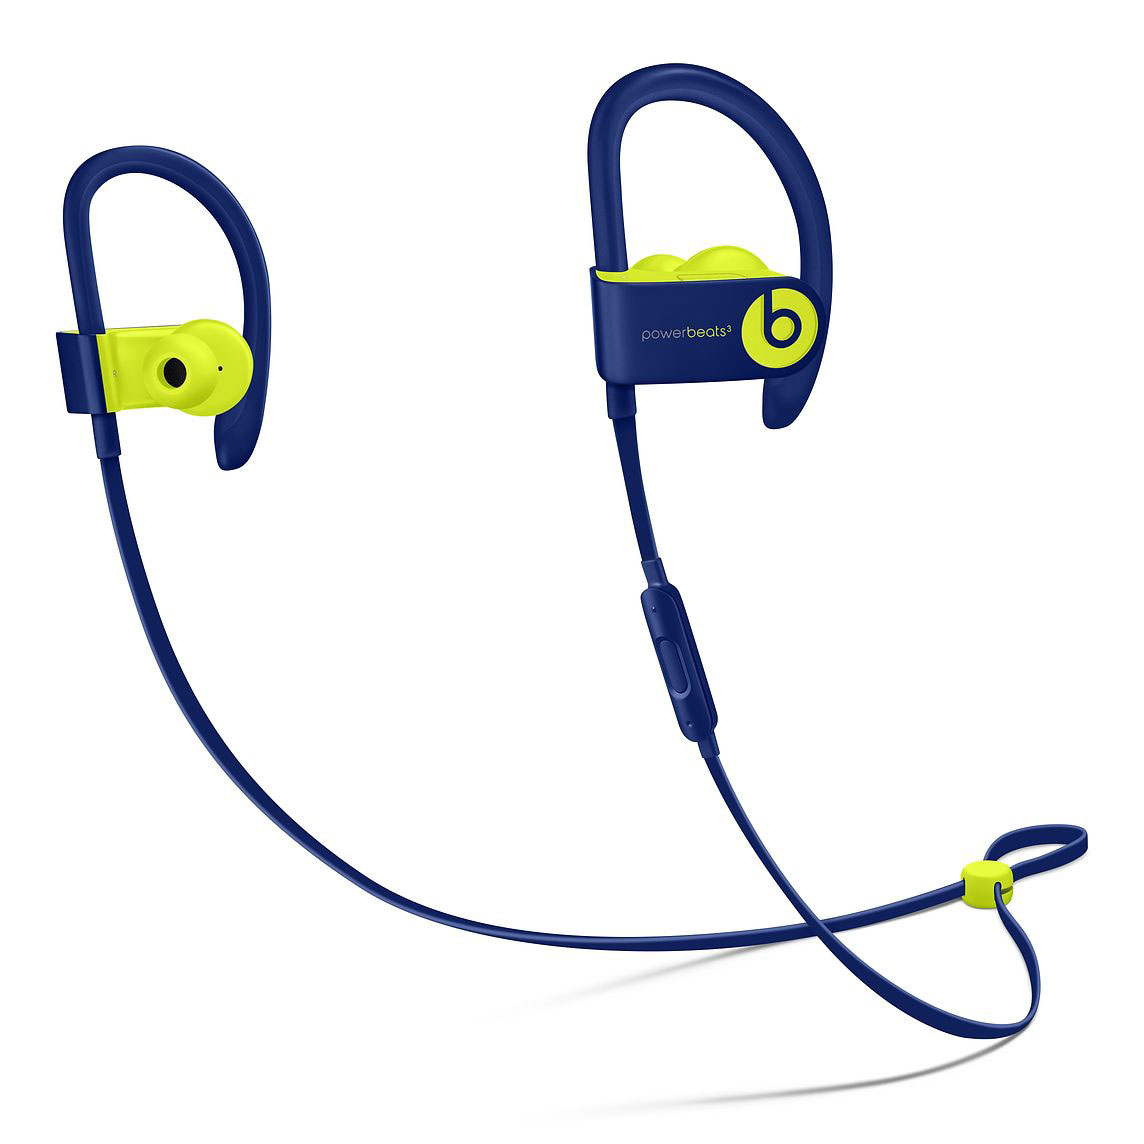 Beats-PowerBeats3-Wireless-Earphones-Pop-Collection-Back-To-Uni-Offer